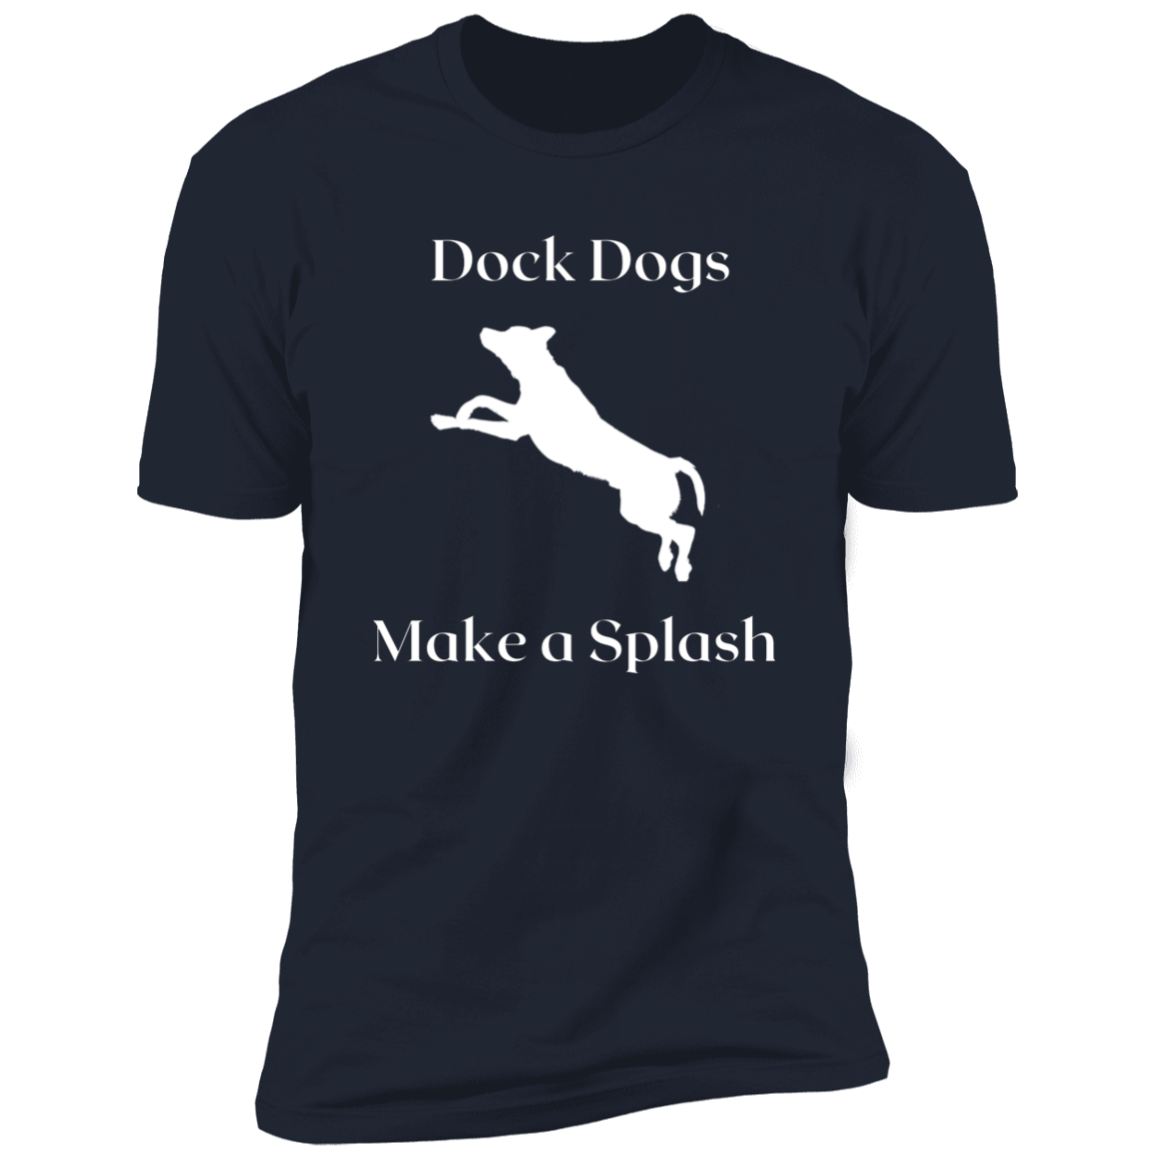 Dock Dogs Make a Splash Dock Diving t-shirt, Dock diving shirt, in navy blue